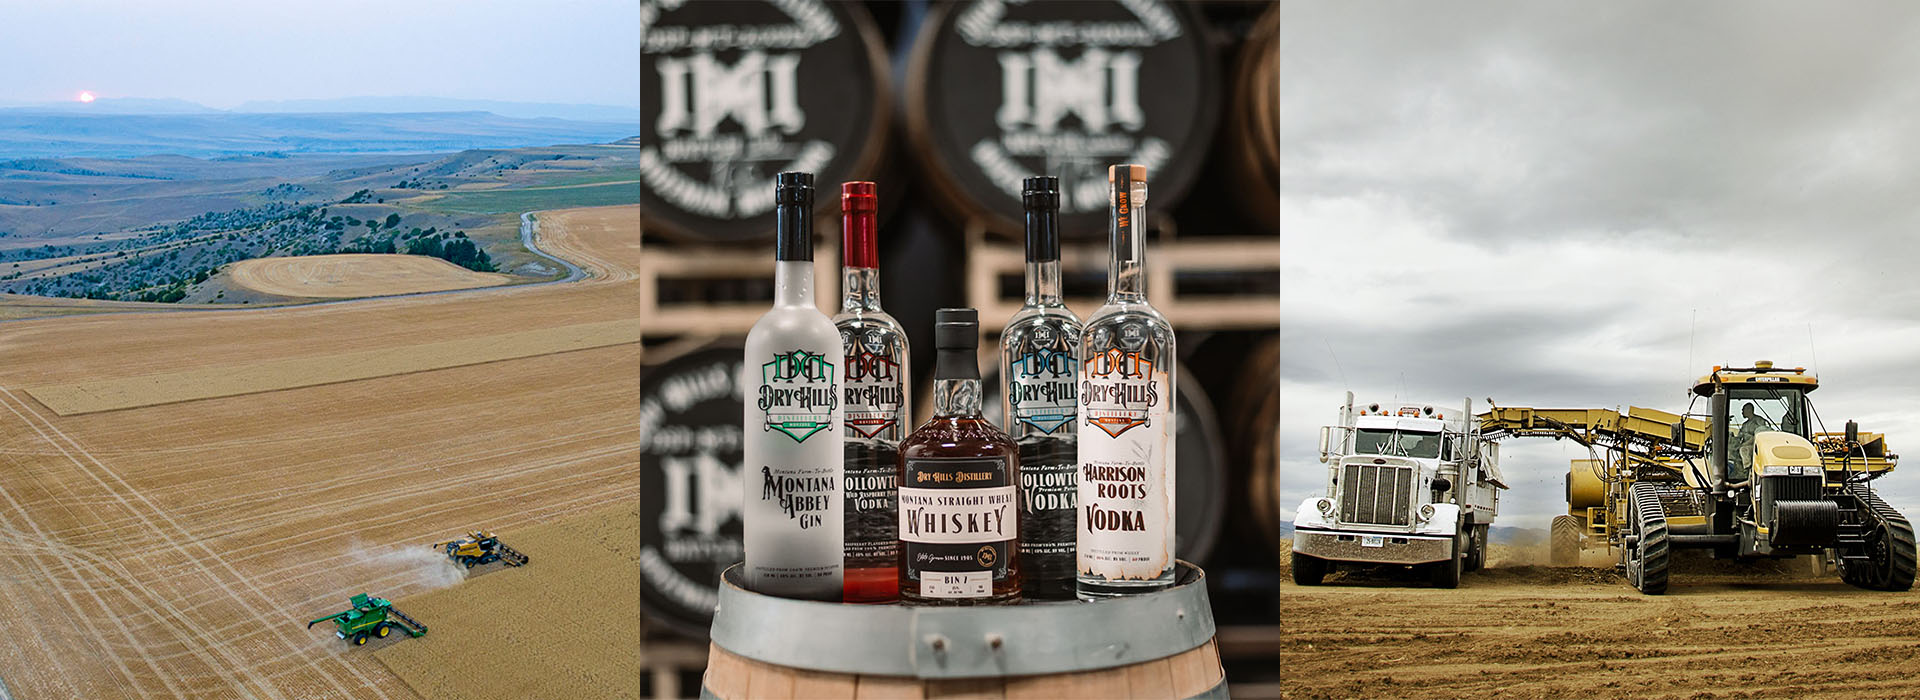 Montana Vodka Gin Whiskey Dry Hills Distillery